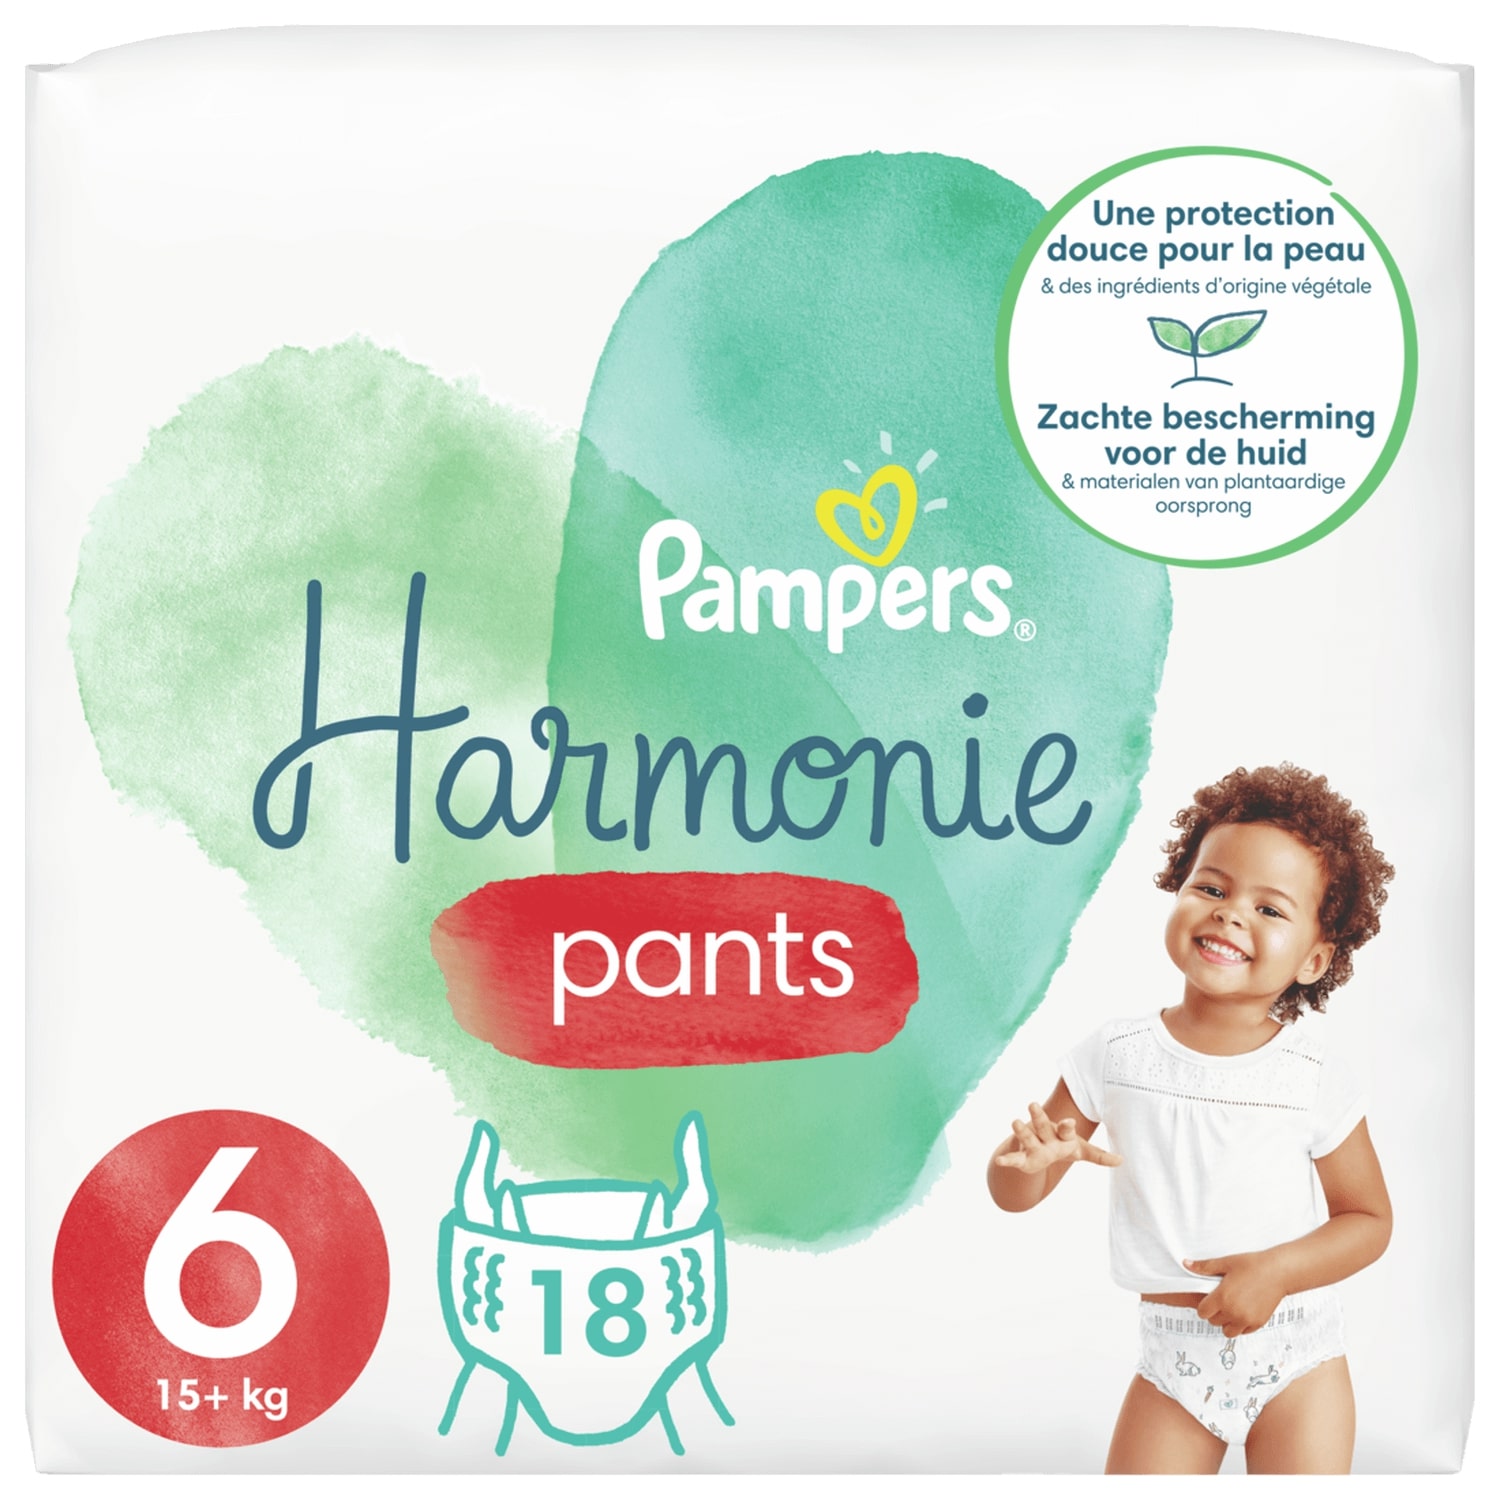 Pampers - Couches-culottes Pants Taille 5 (Junior) 12-17 kg, Mega Box 152  pcs